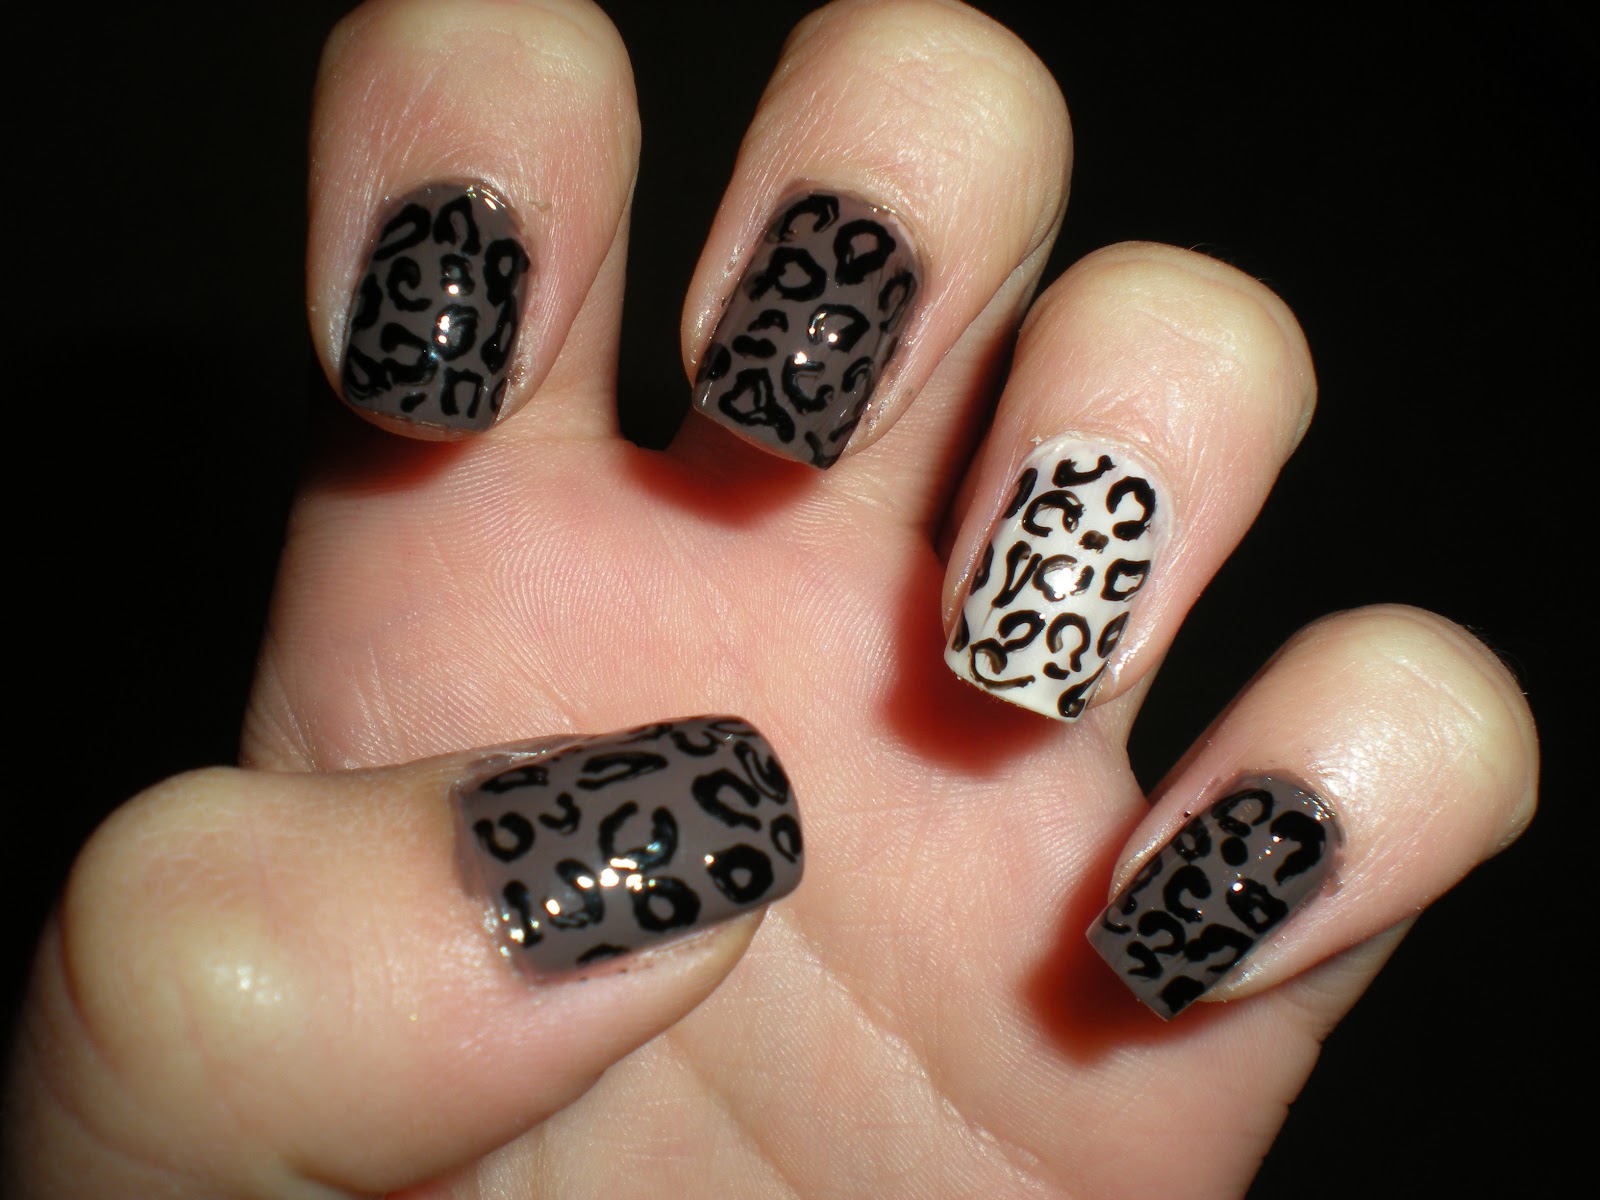 9. Cheetah Nail Art Designs for Tumblr Nails - wide 6